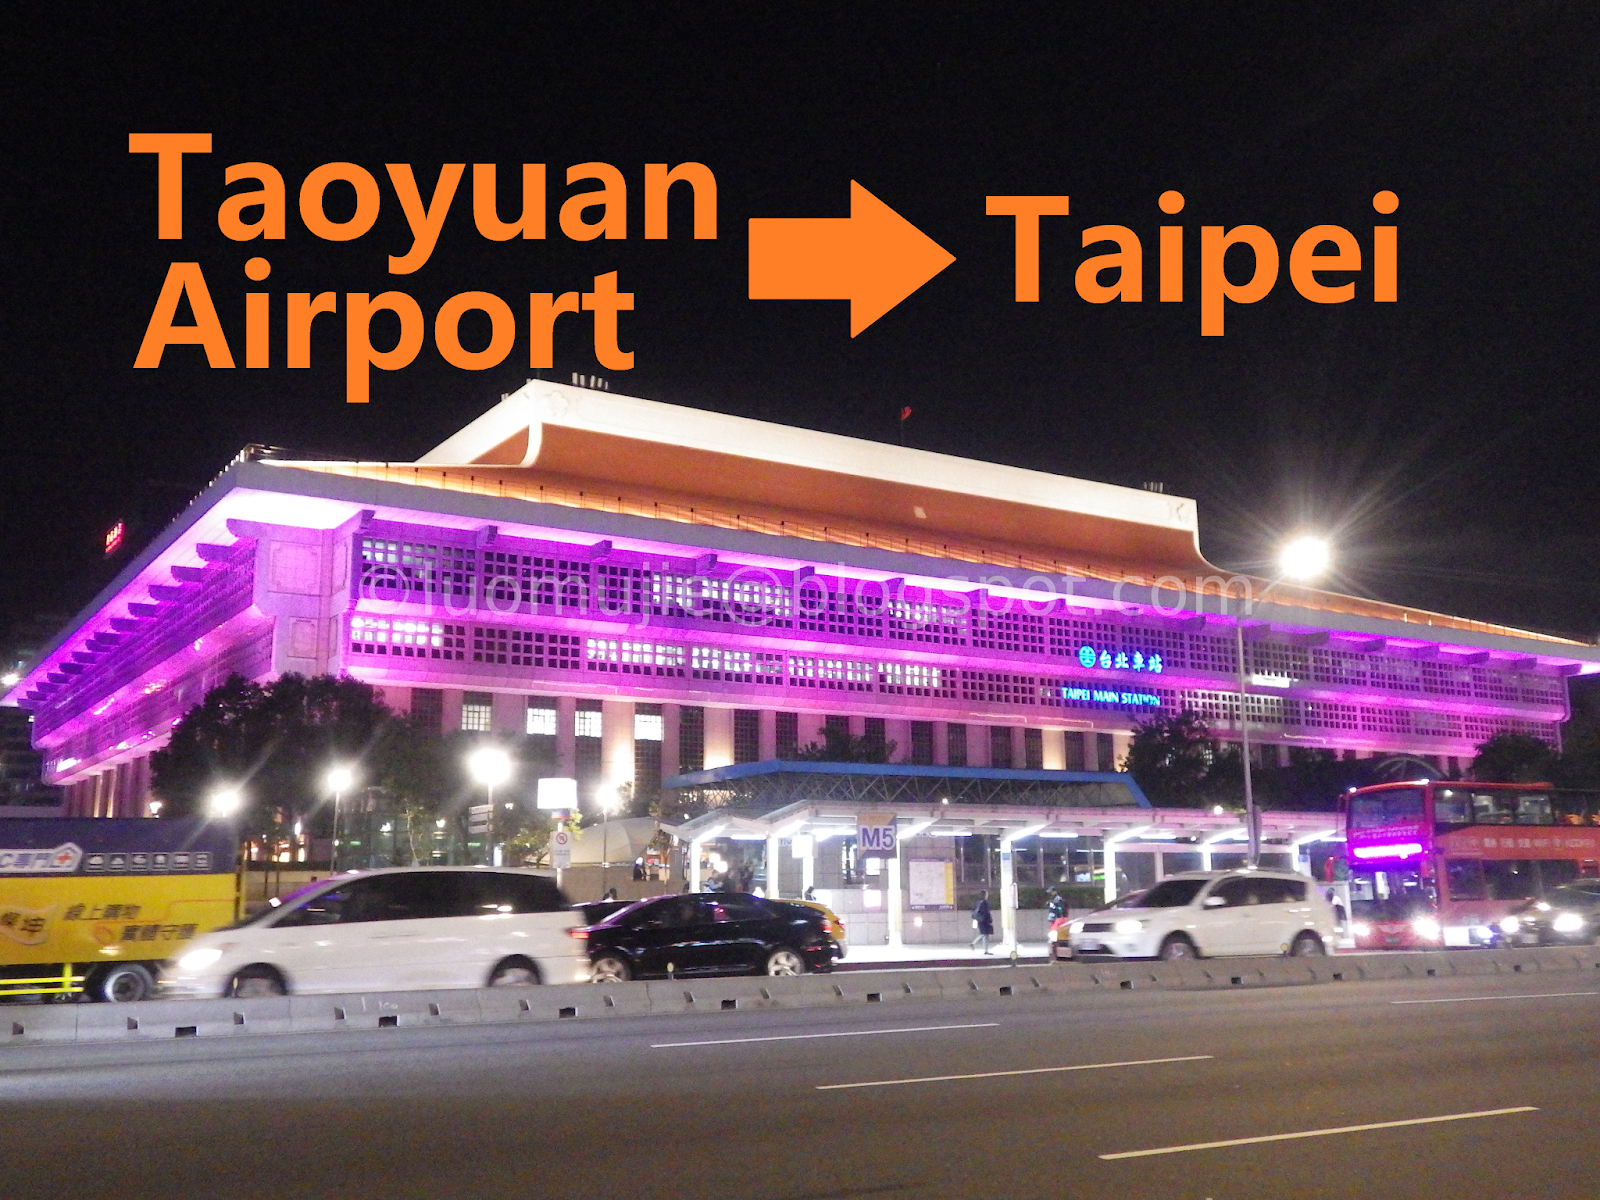 Taoyuan Airport to Taipei